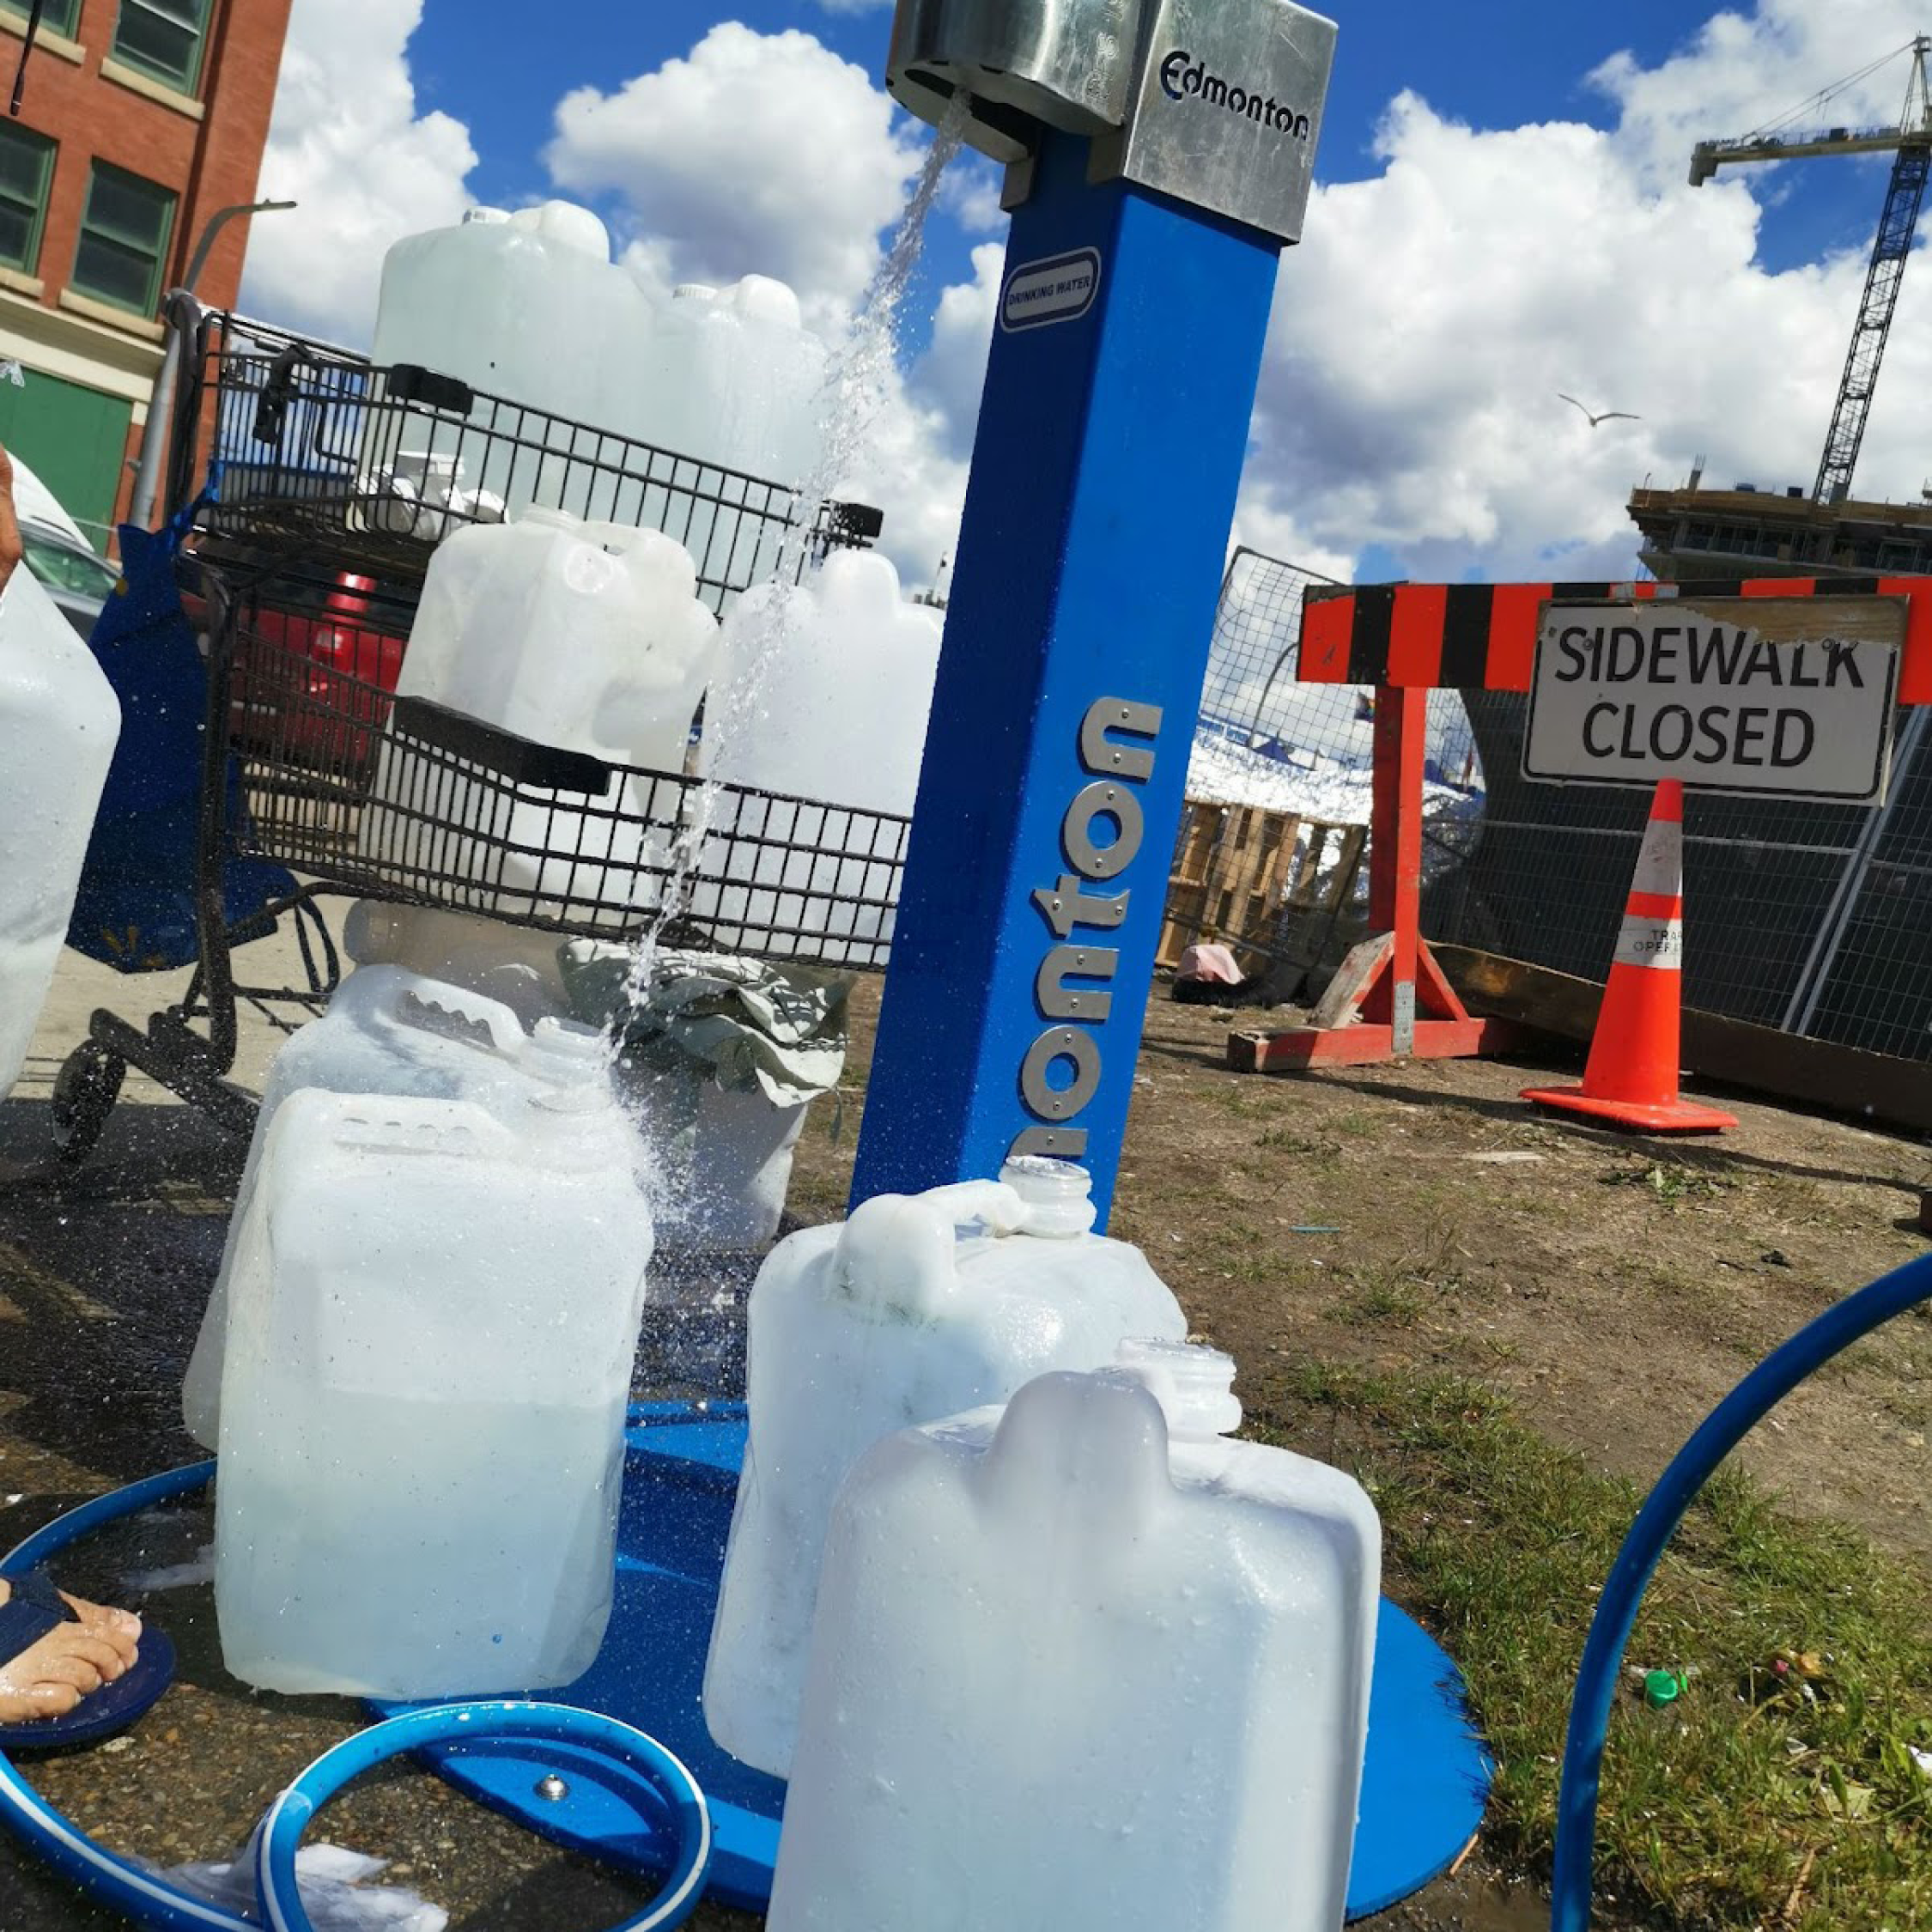 Water pump and jugs